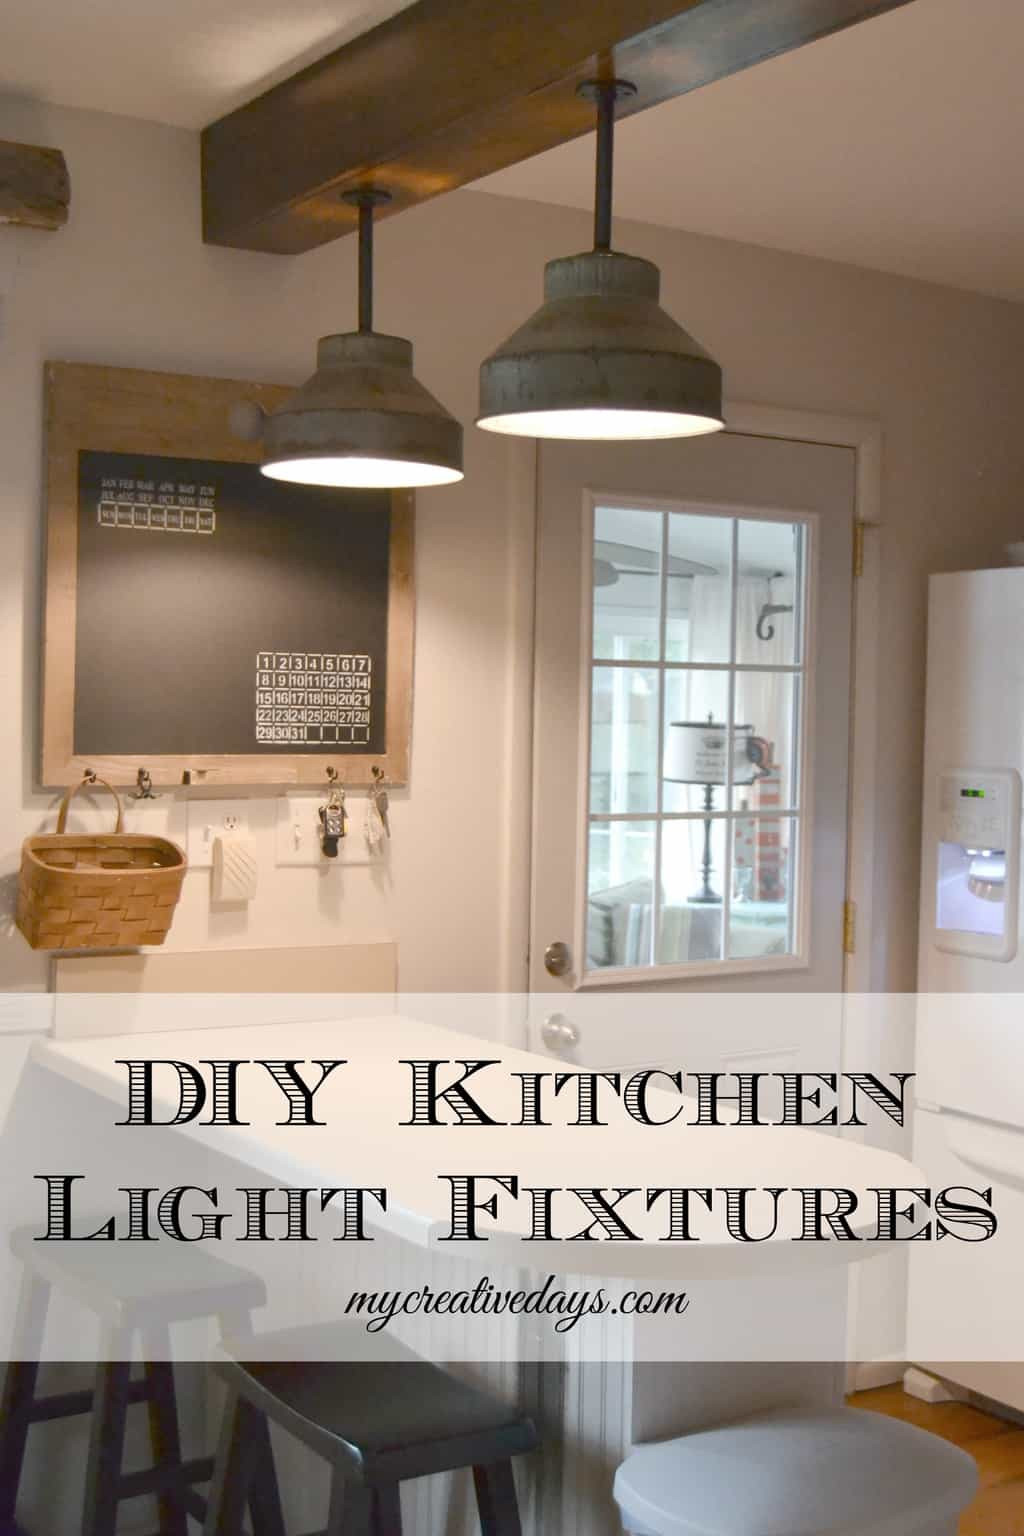 Best ideas about DIY Kitchen Lighting
. Save or Pin DIY Kitchen Light Fixtures Part 2 My Creative Days Now.